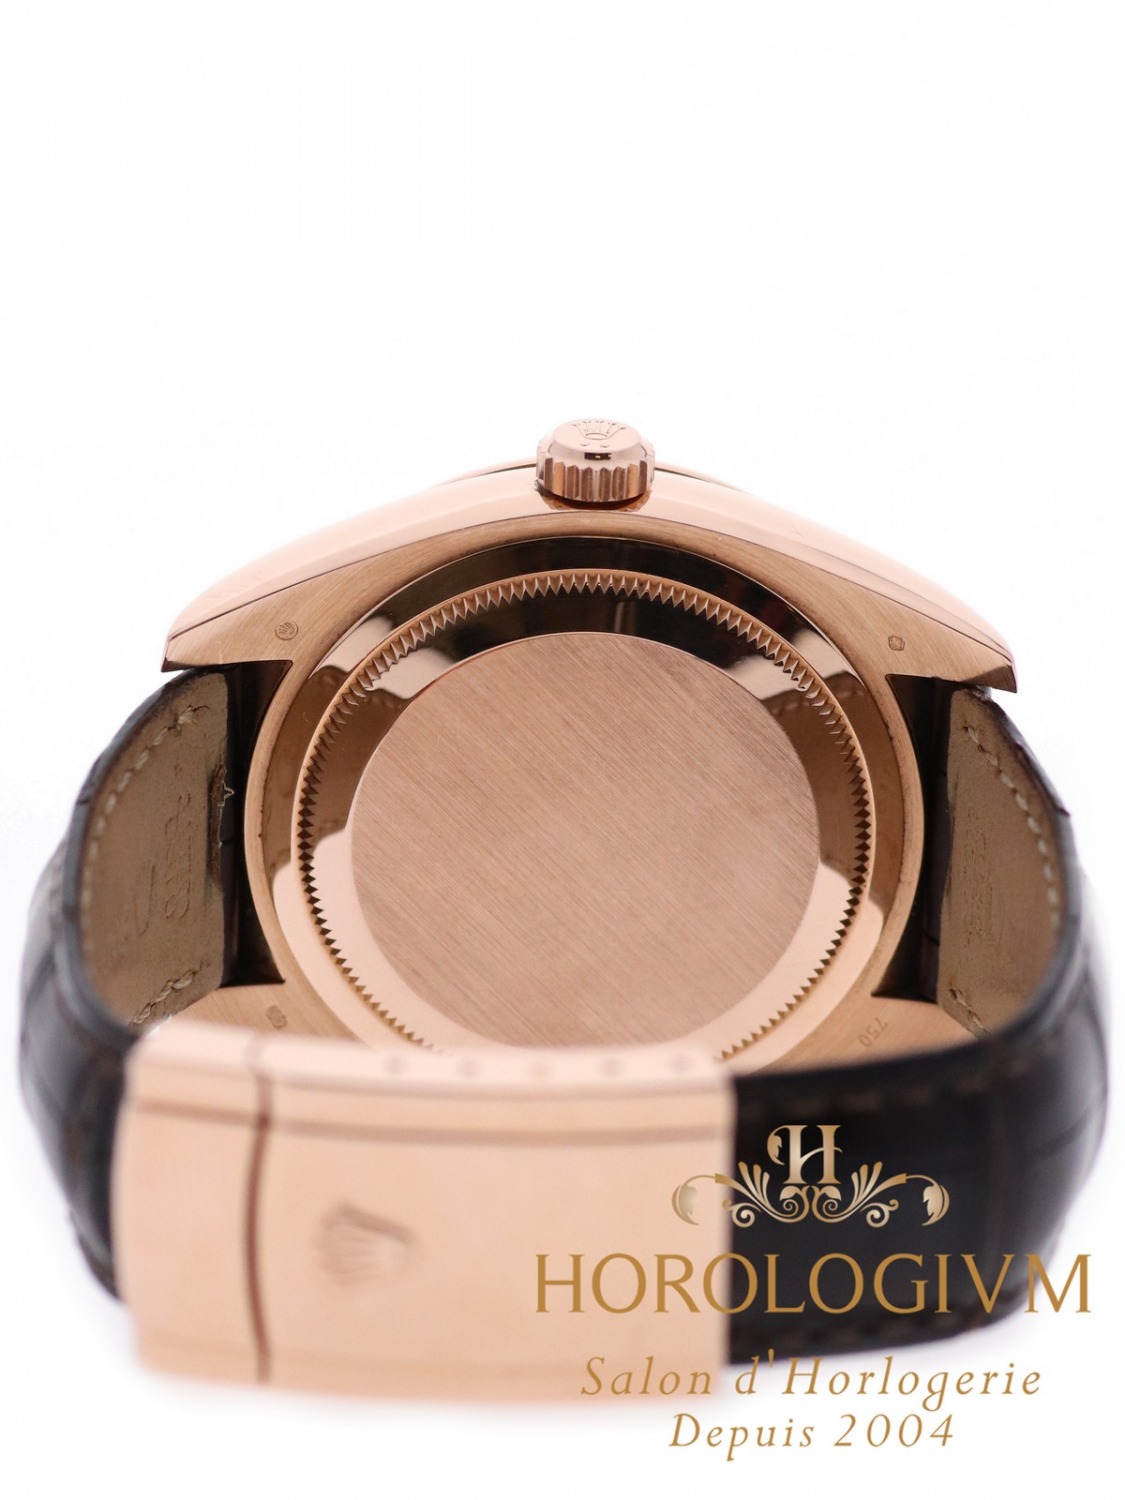 Rolex Sky-Dweller Brown Dial Ref. 326135  watch, rose gold